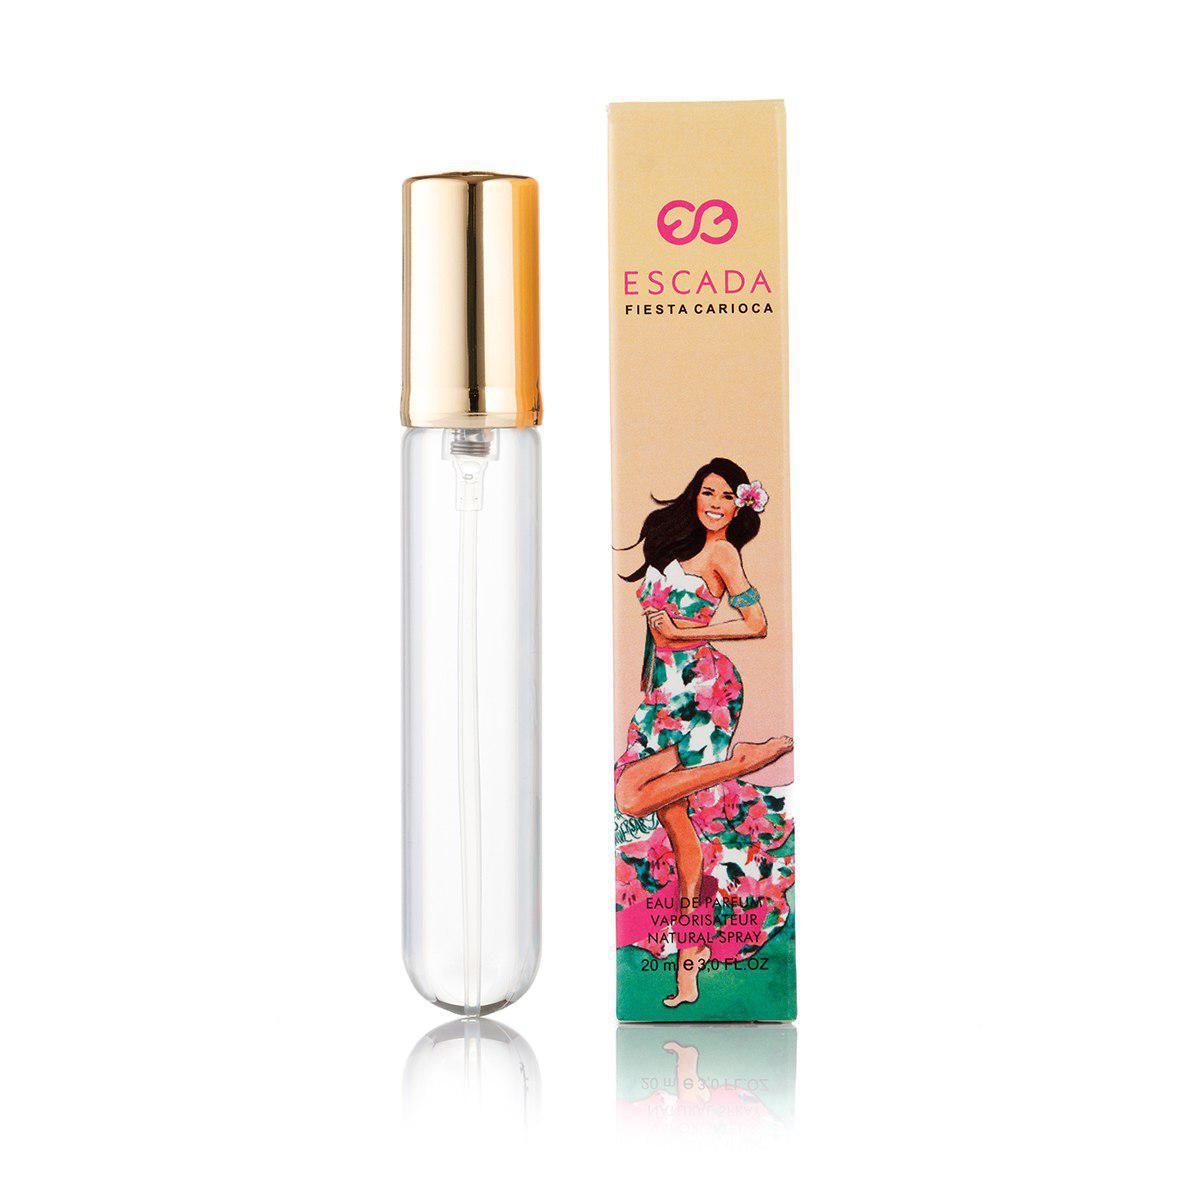 Жіночі міні парфум ручка Escada Fiesta Carioca - 20 мл